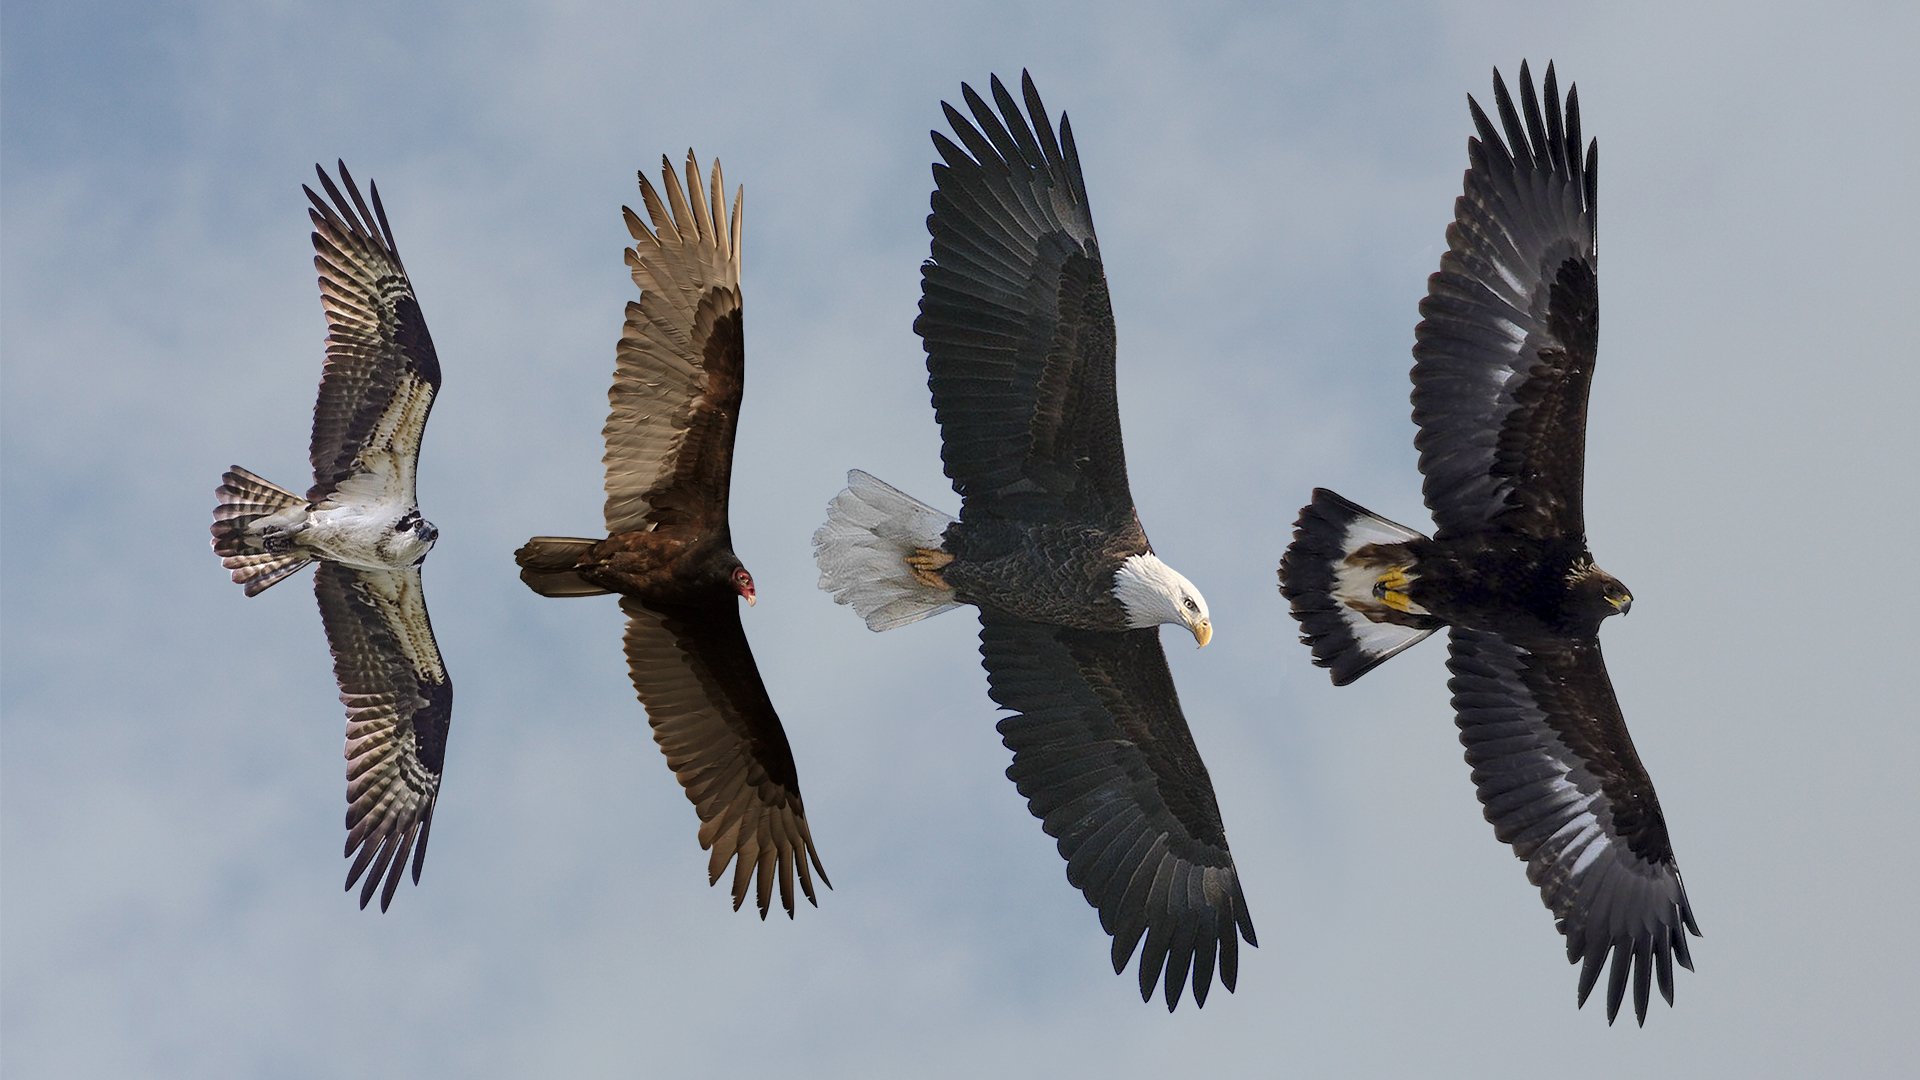 Left to right: Osprey, Turkey Vulture, Adult Bald Eagle, Subadult Golden Eagle